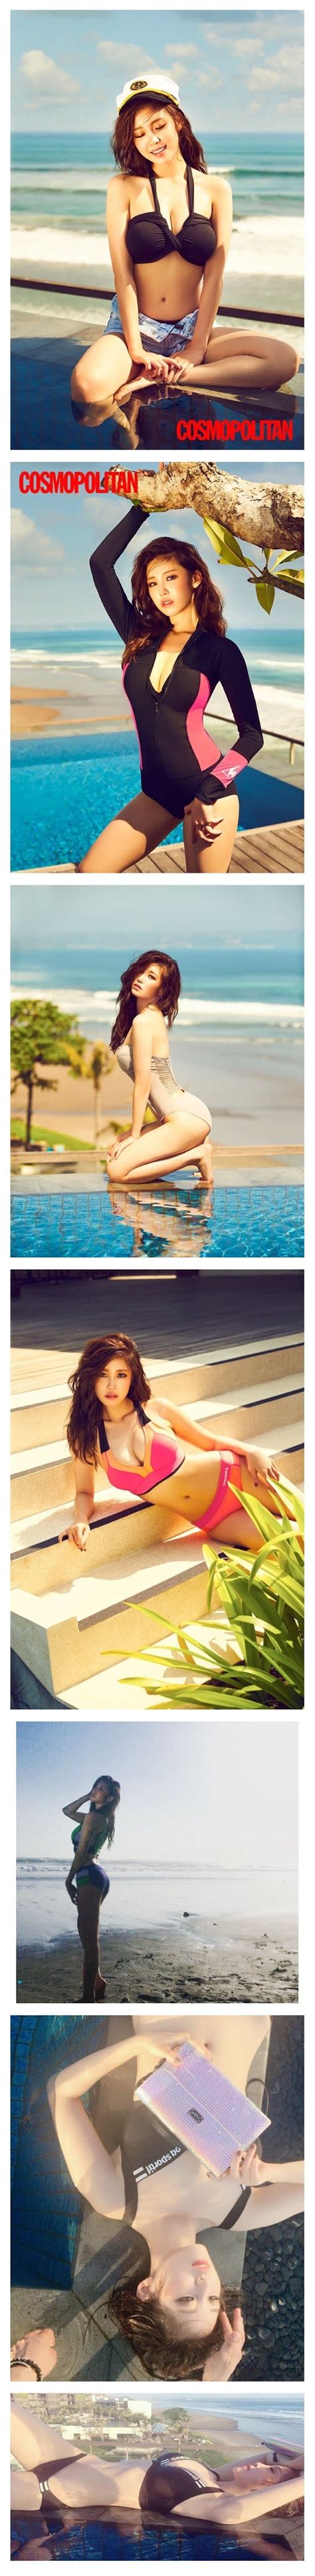 cosmopolitan jeon hyo sung bikini pictorial charless issue humor